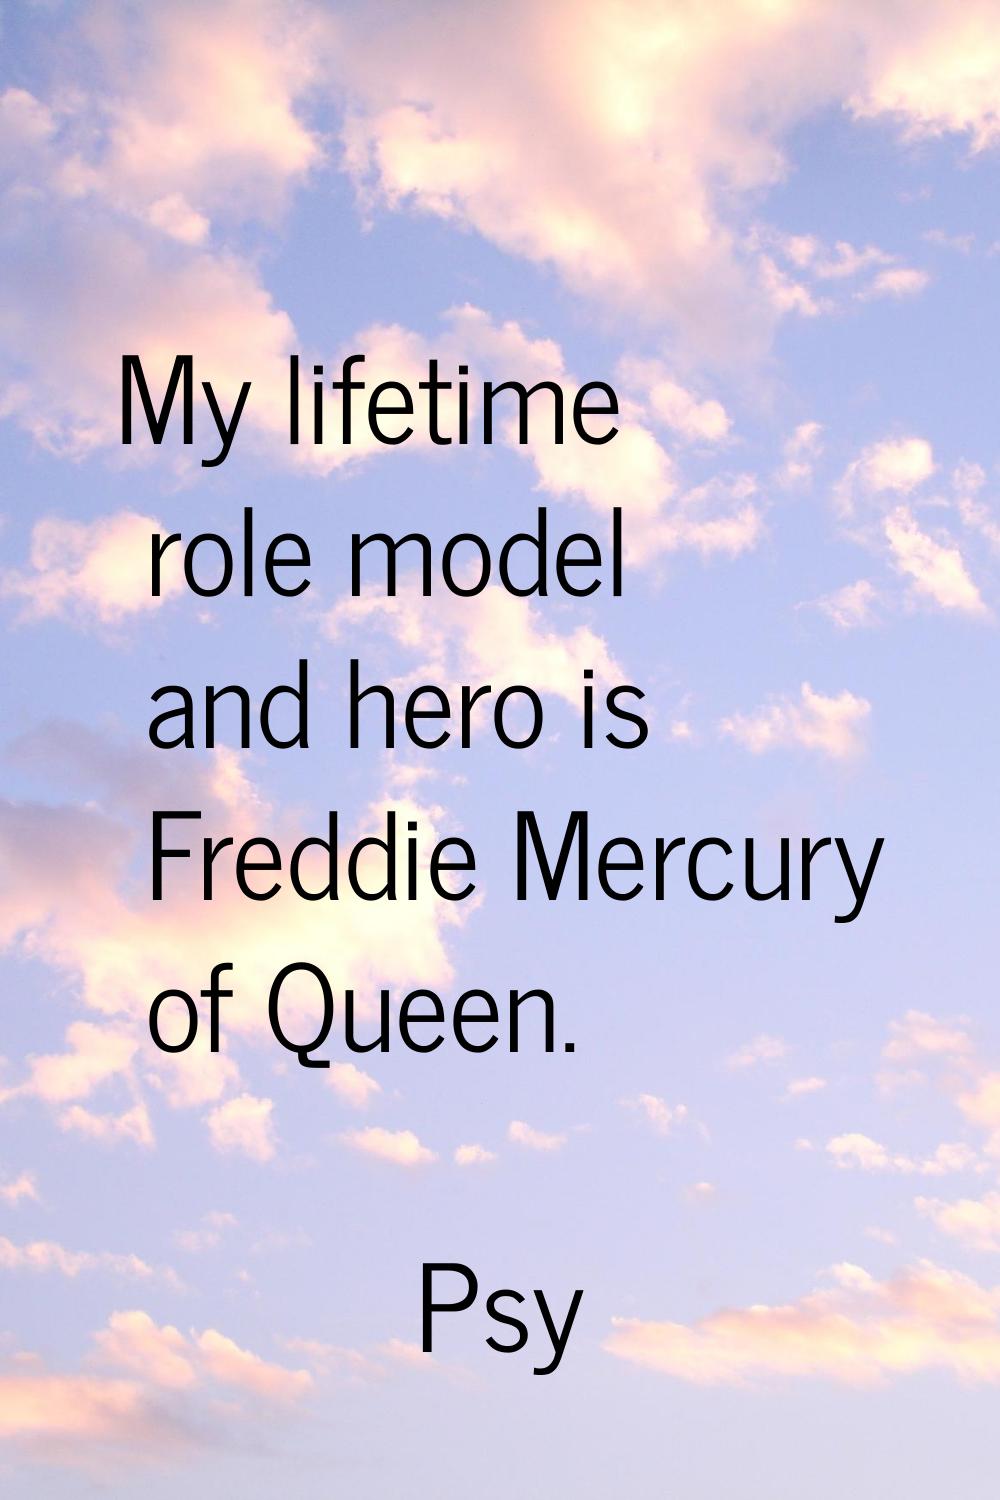 My lifetime role model and hero is Freddie Mercury of Queen.